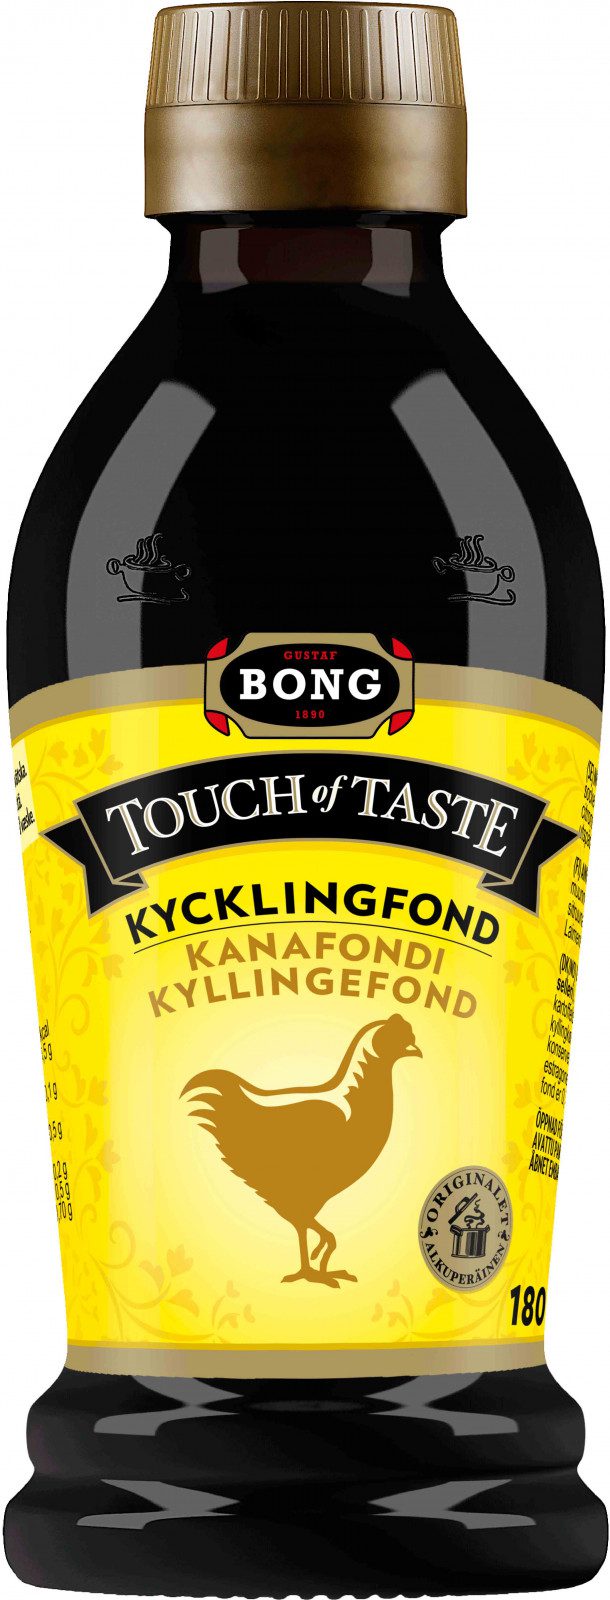 Bong touch of taste - kycklingfond